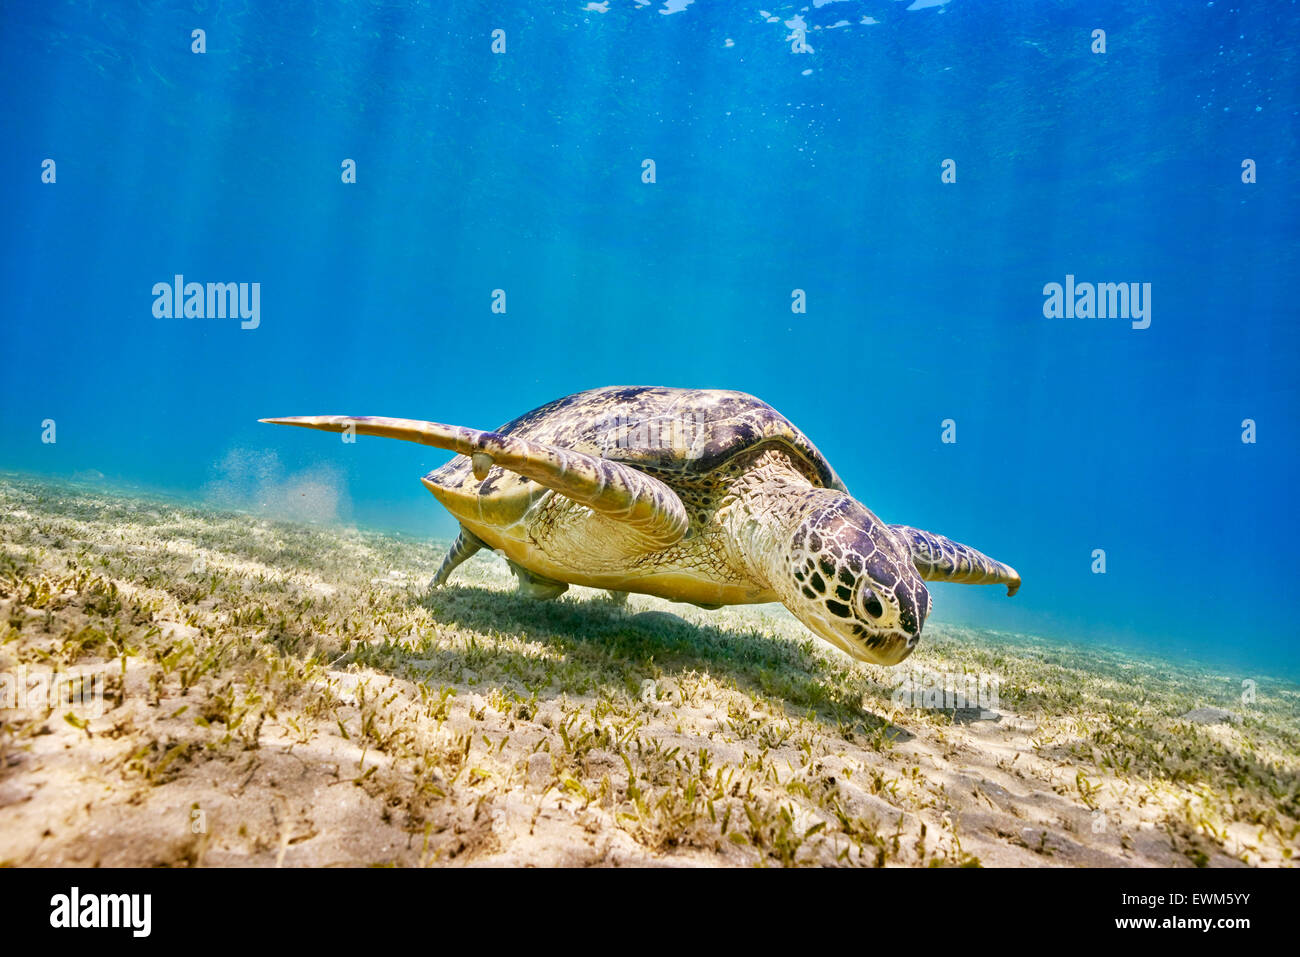 Grazing Sea Turtle, Marsa Alam, Red Sea, Egypt Stock Photo